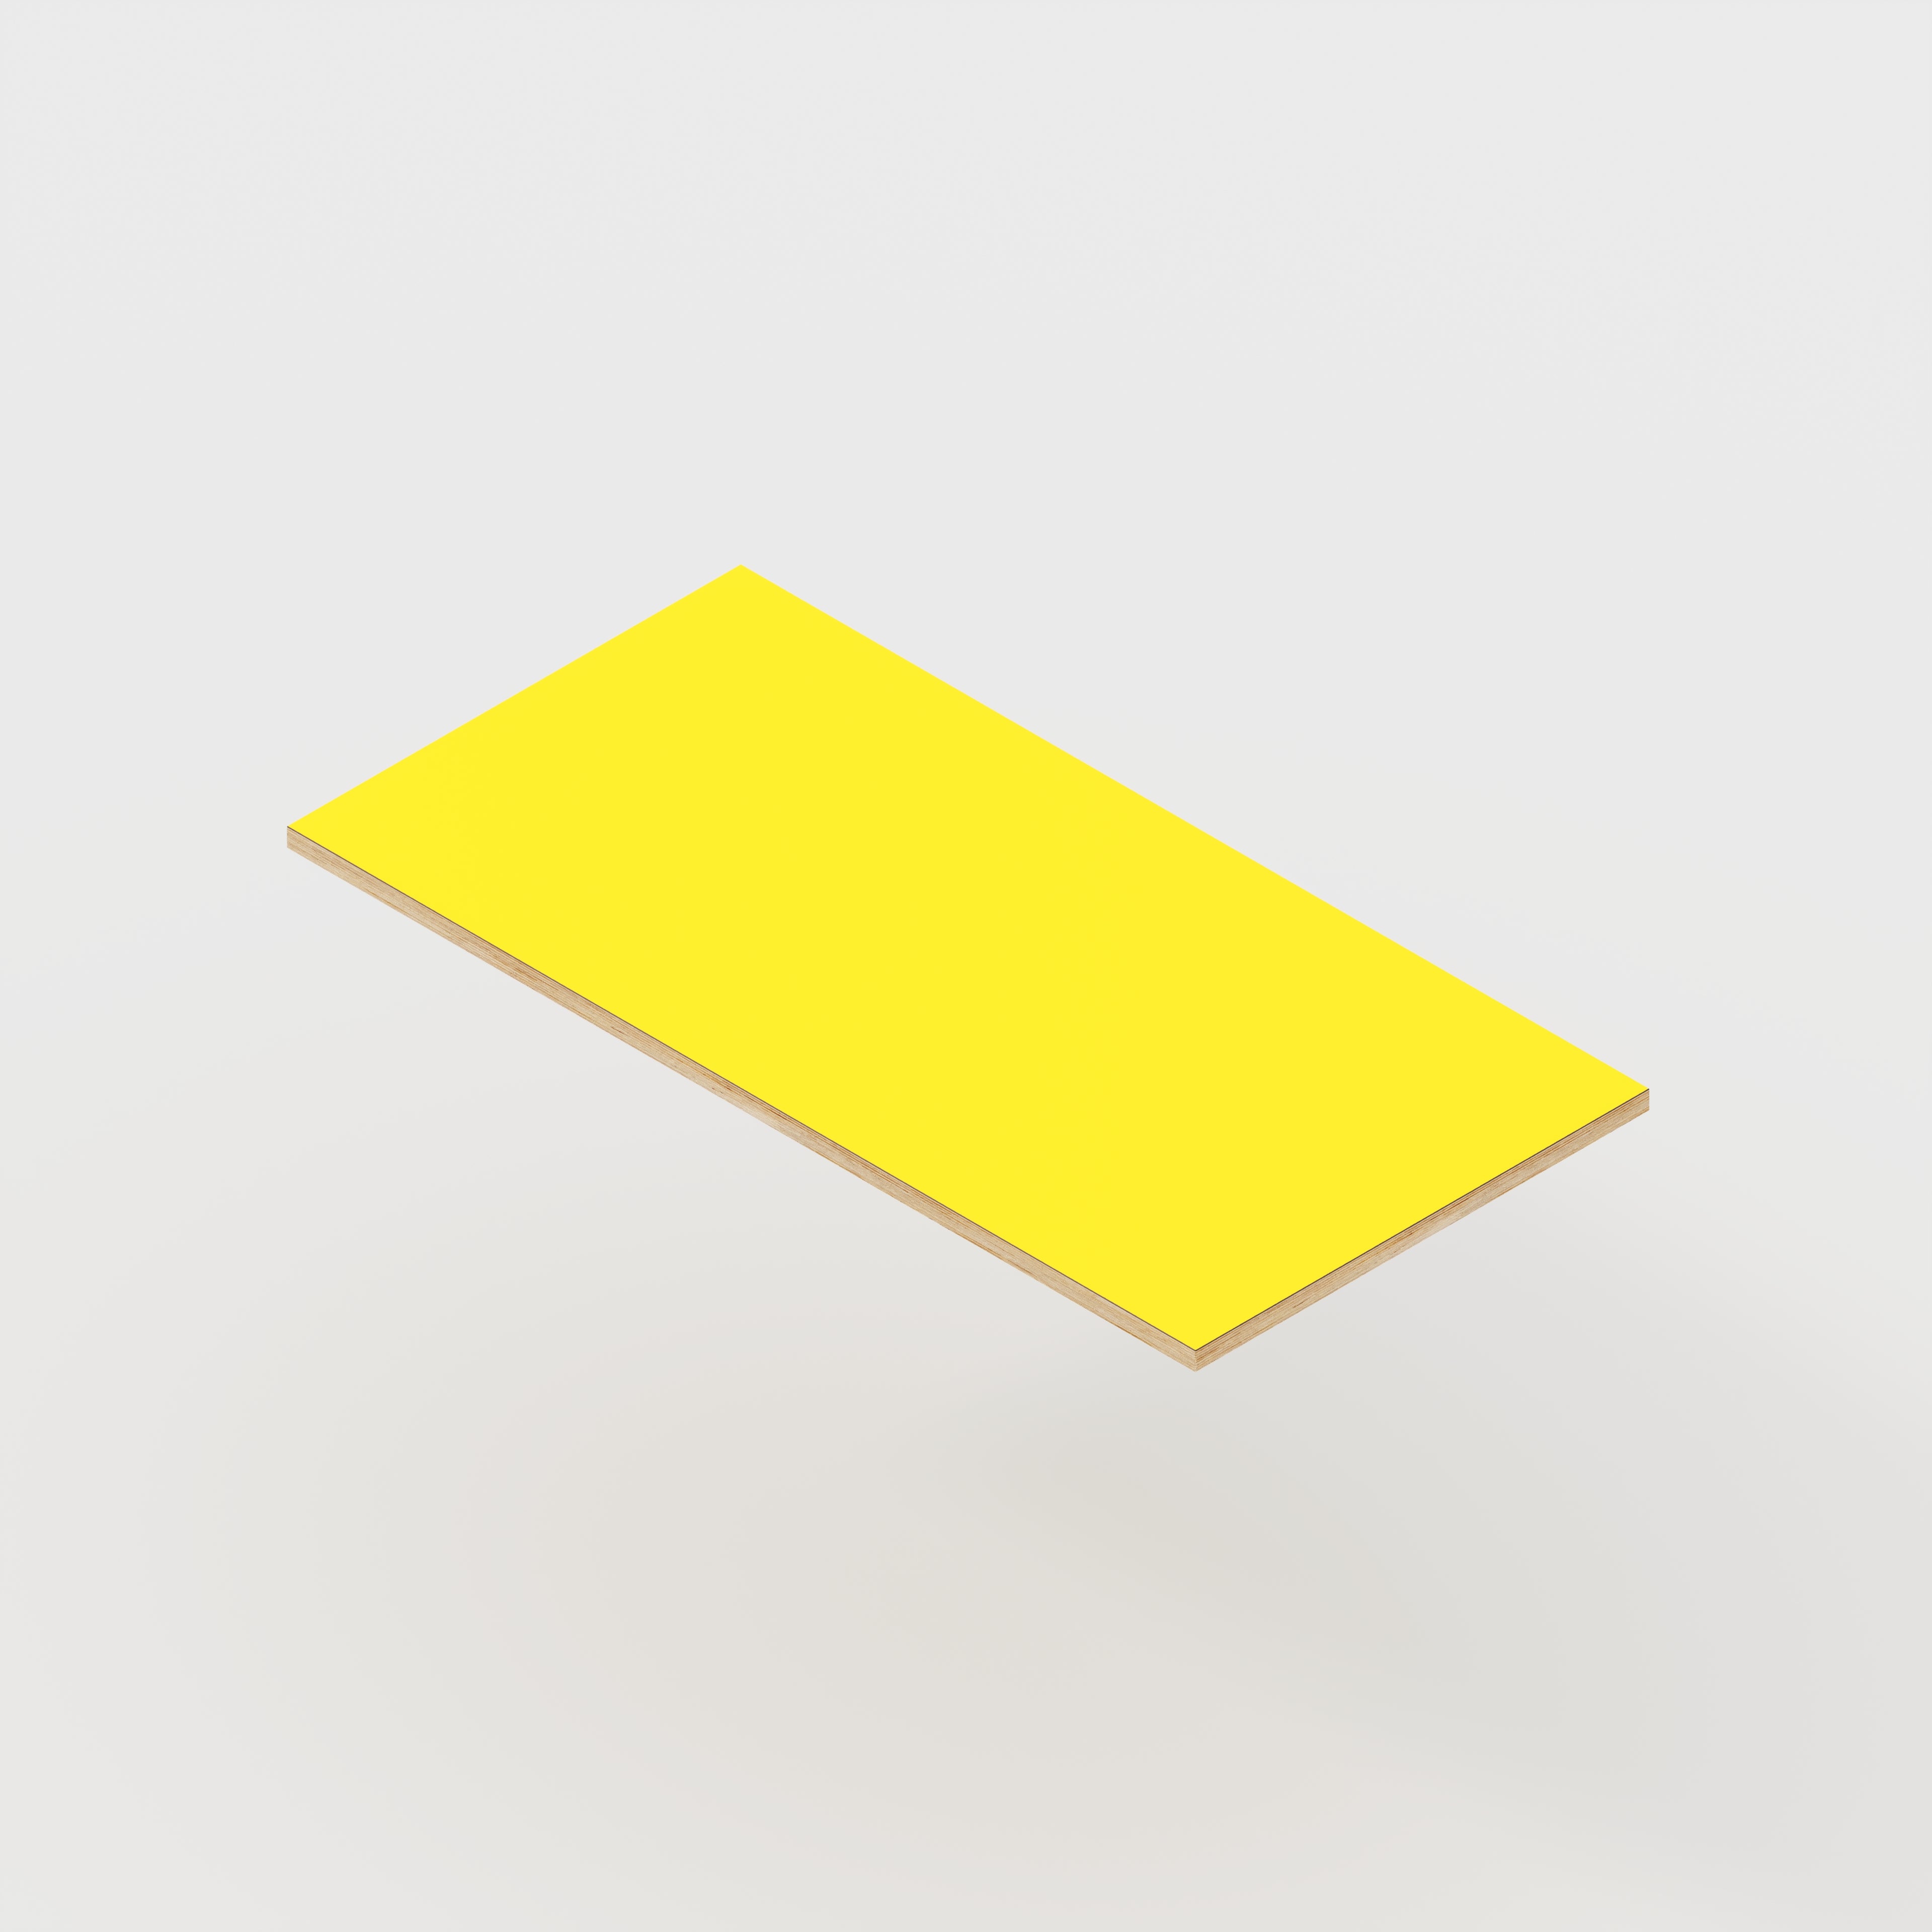 Plywood Desktop - Formica Chrome Yellow - 1200(w) x 600(d)